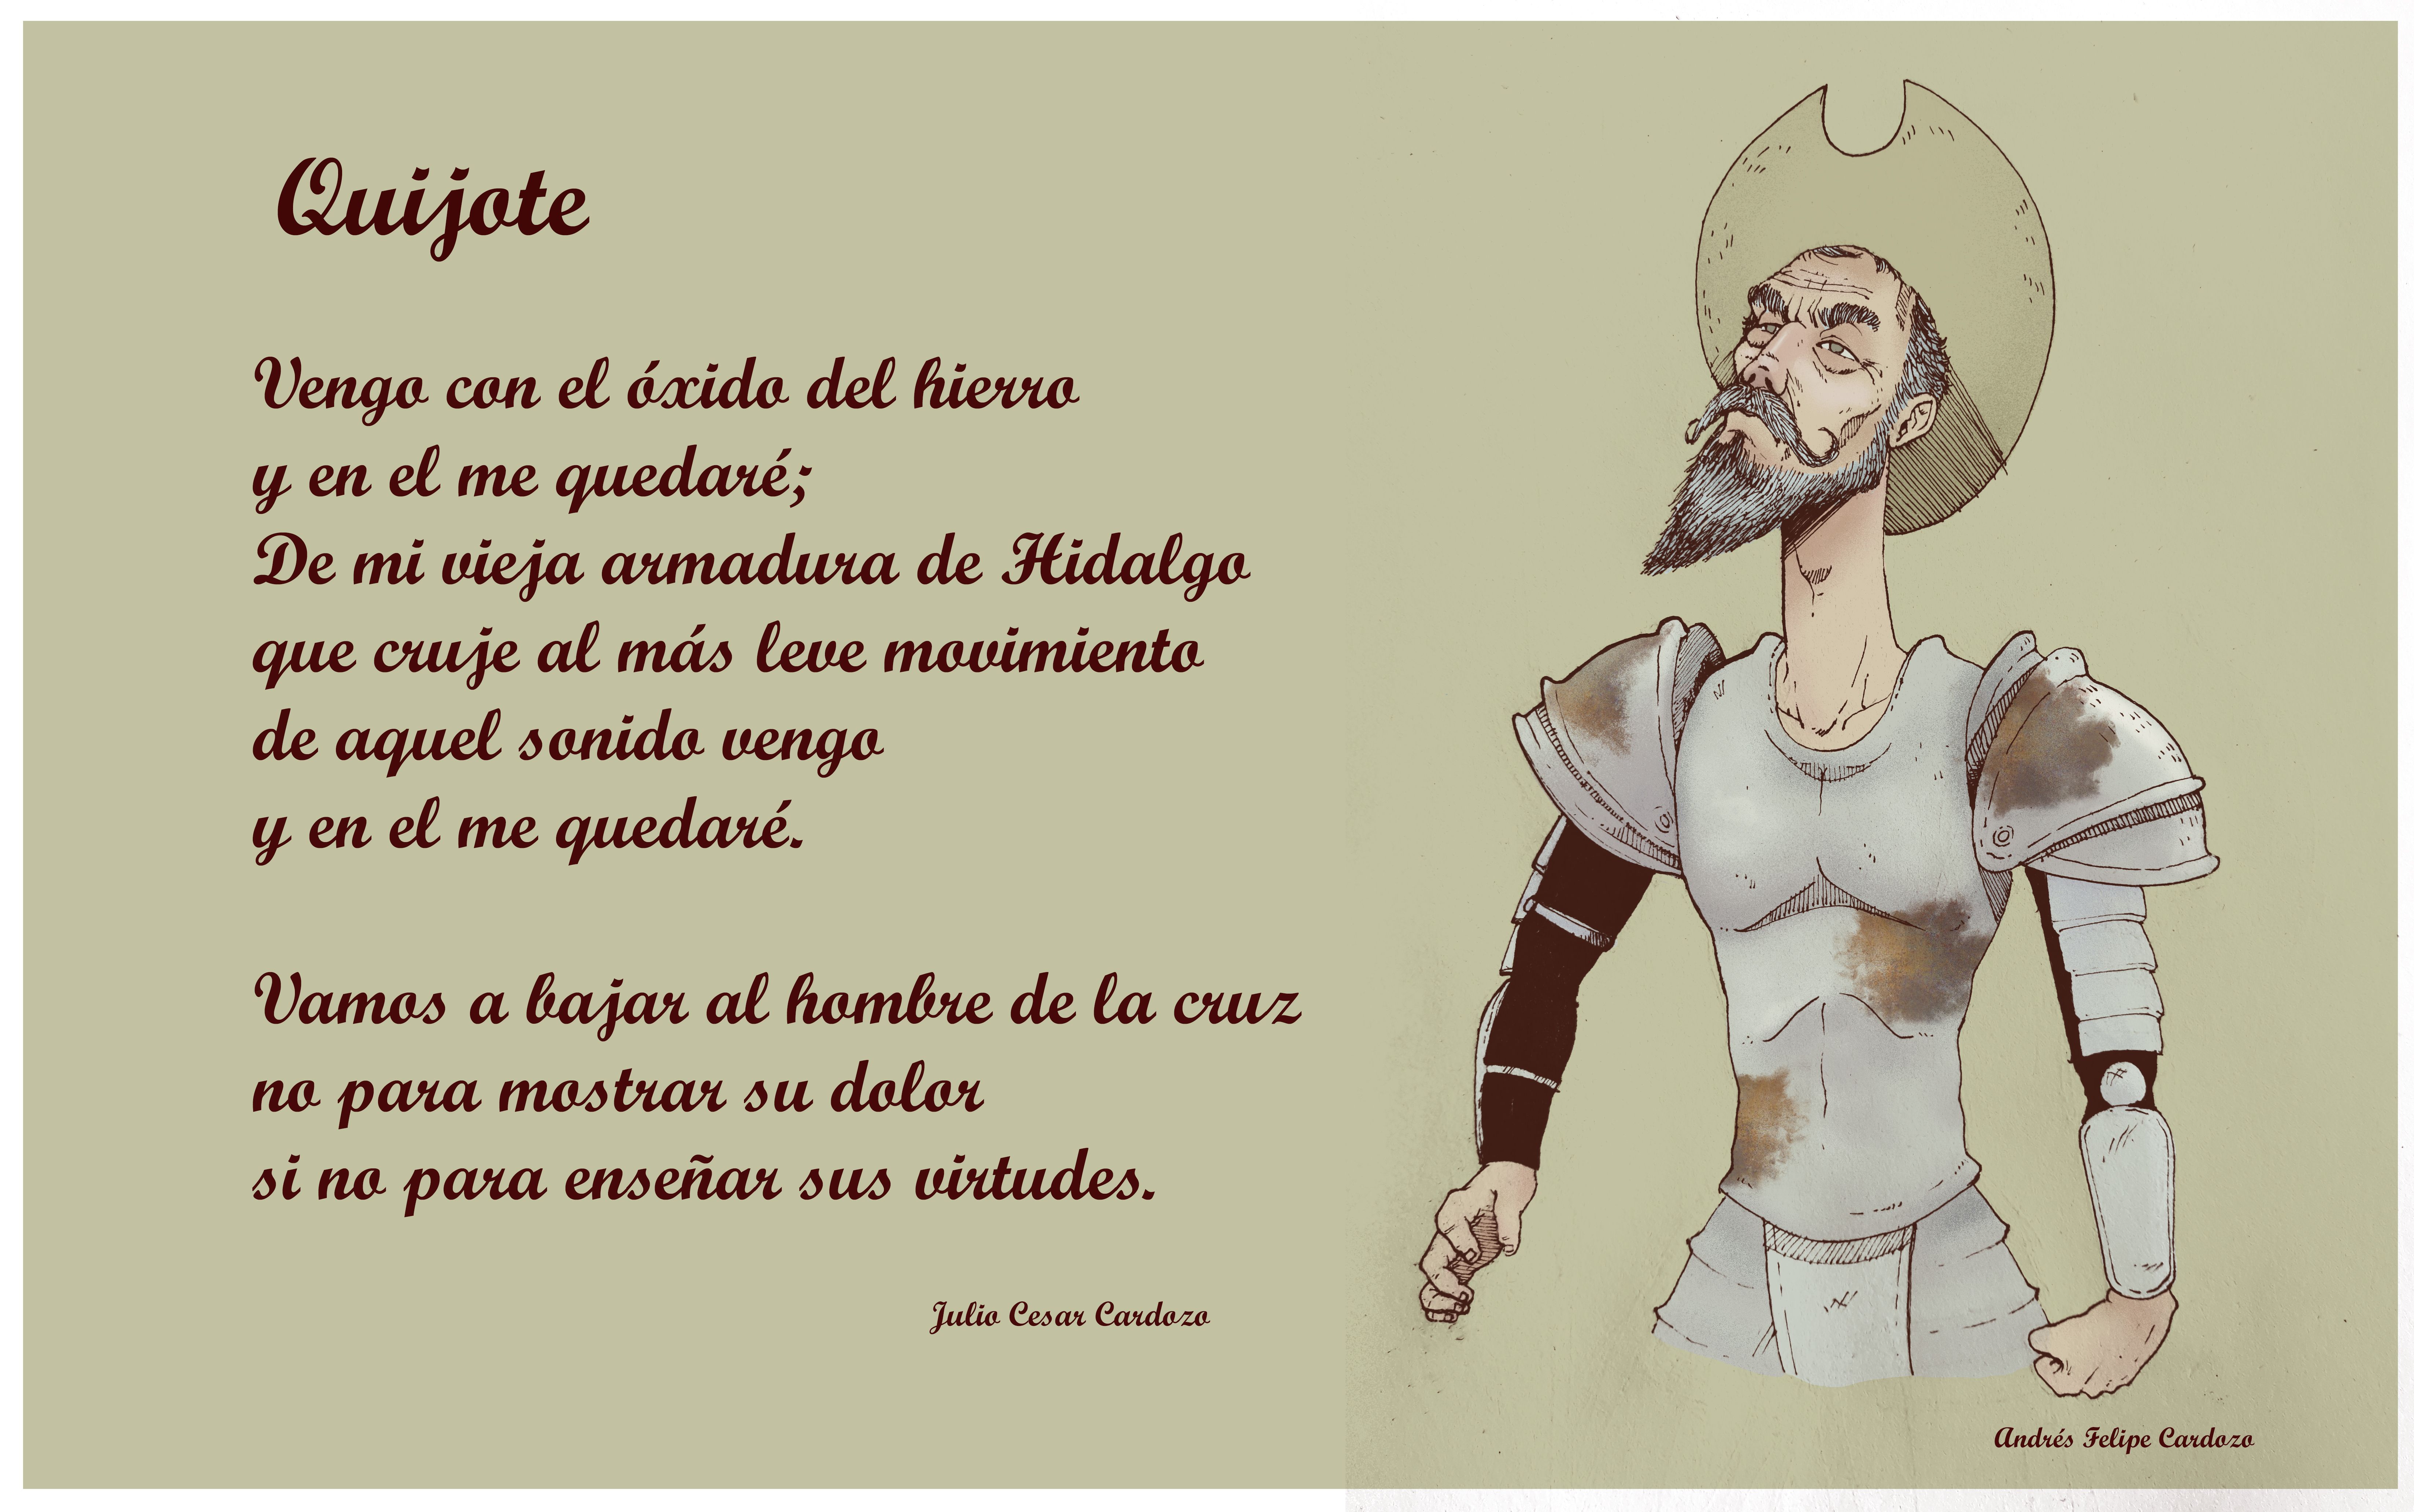 Quijote_poema español.jpg